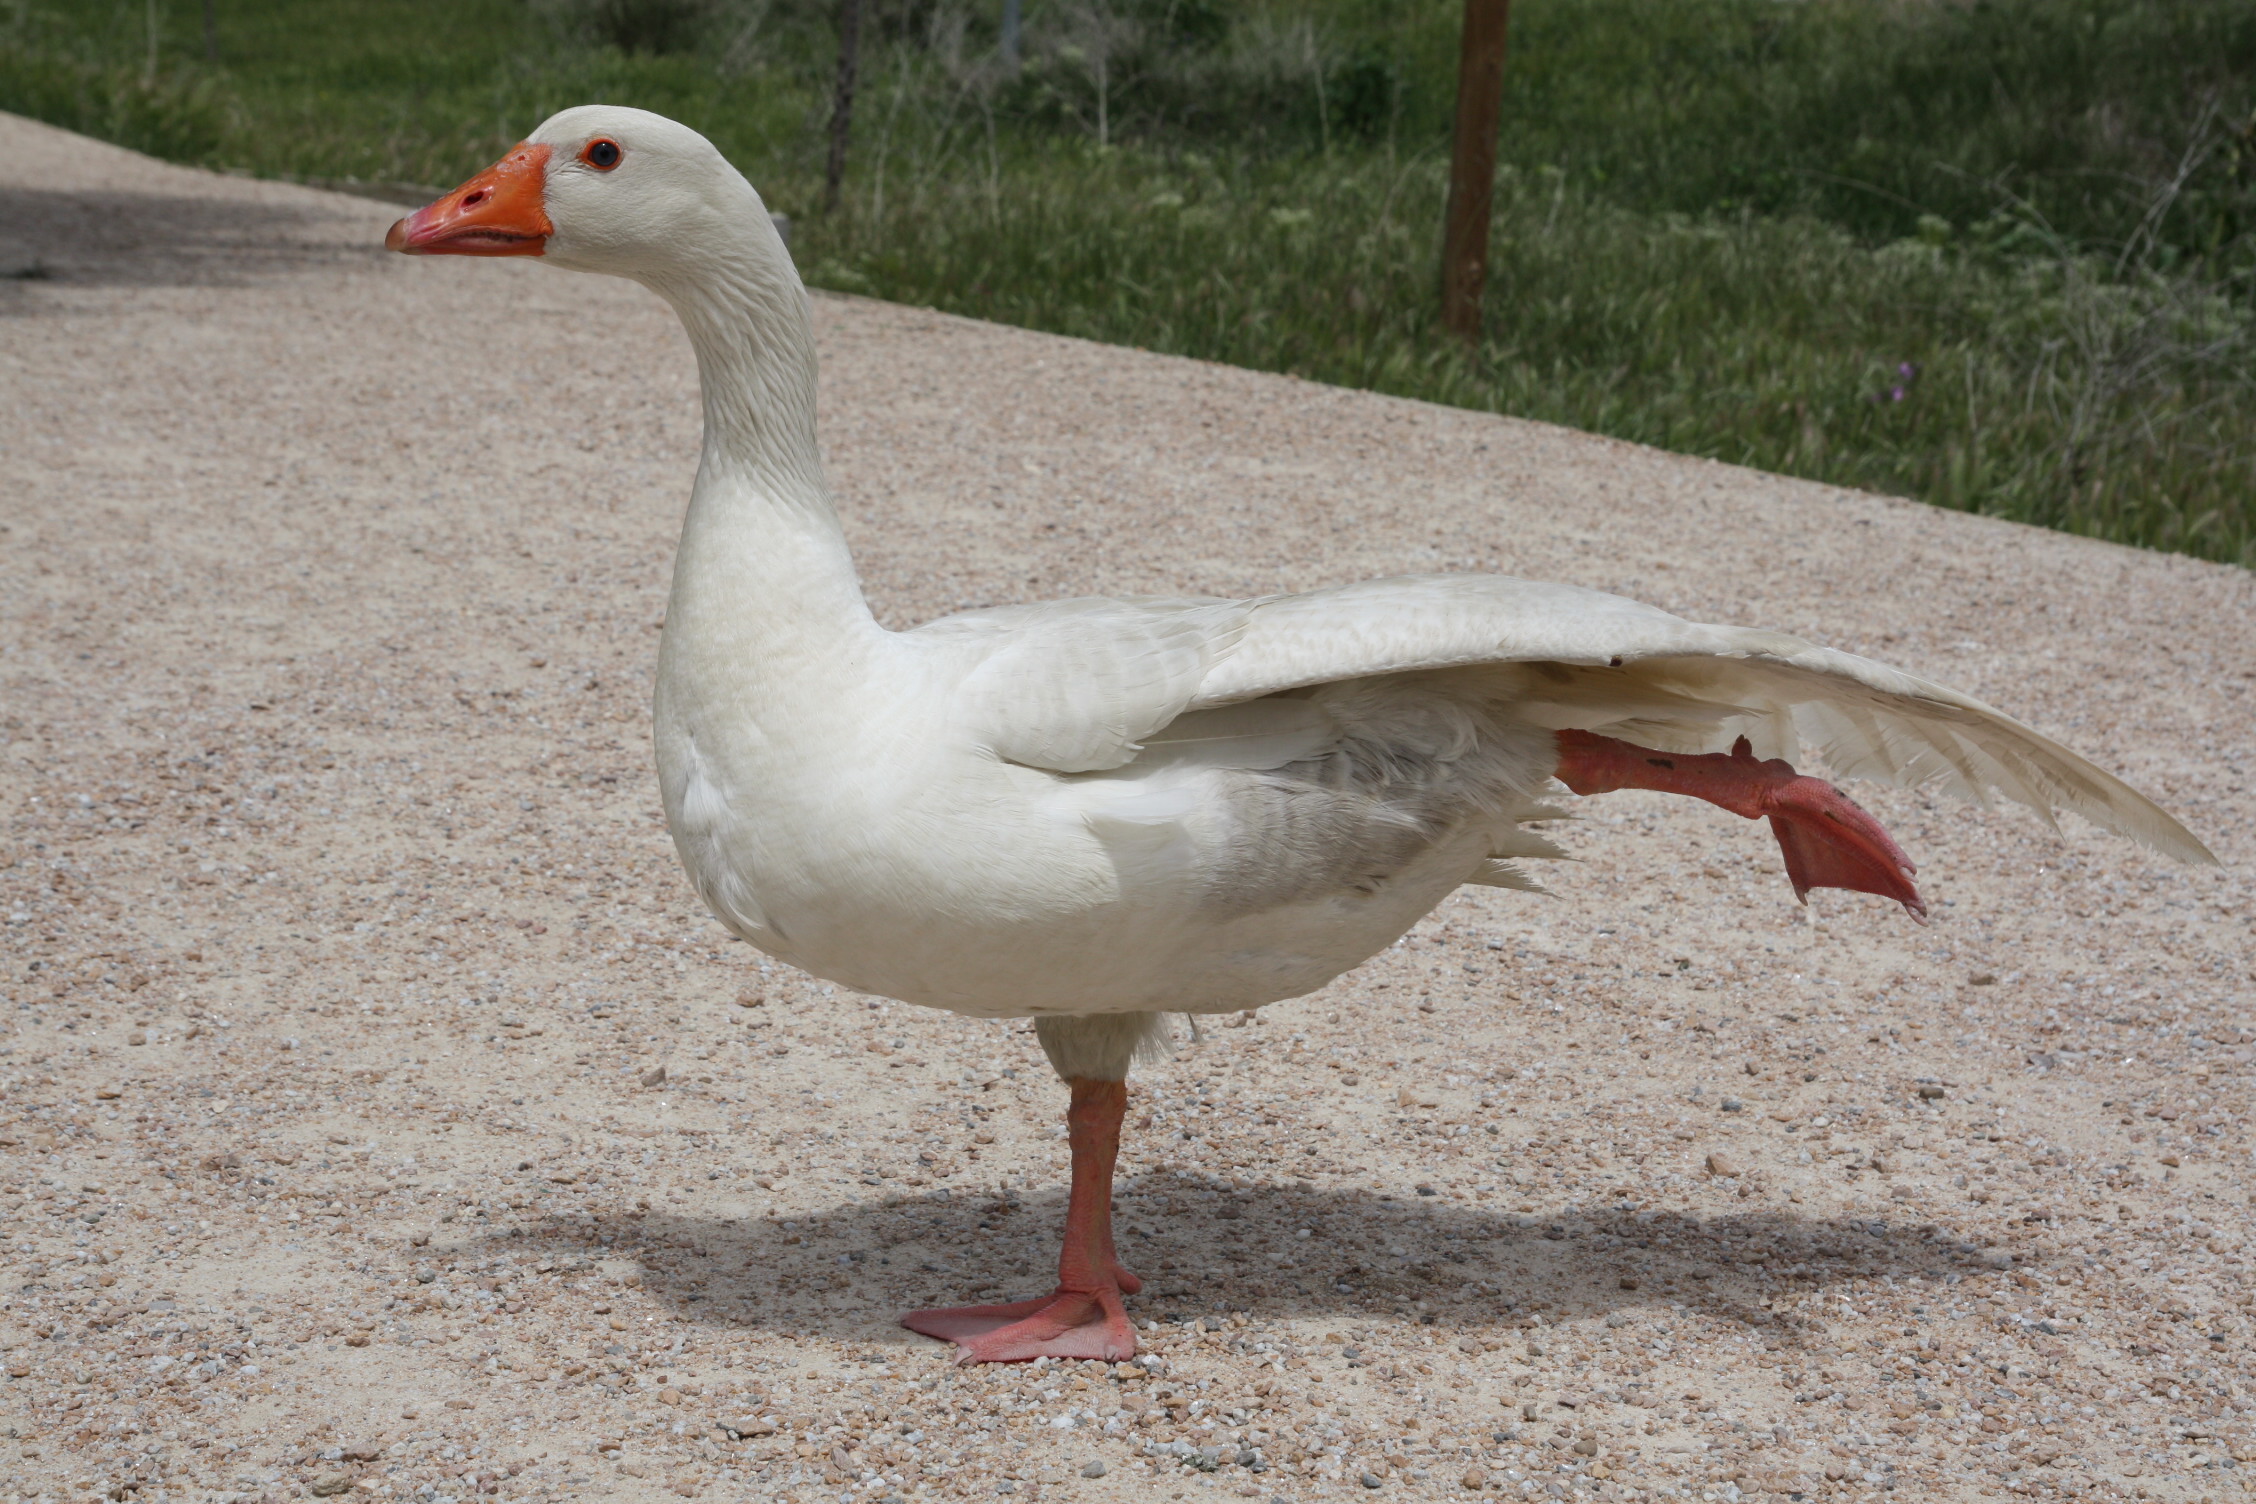 a white goose with orange beak standing on gravel